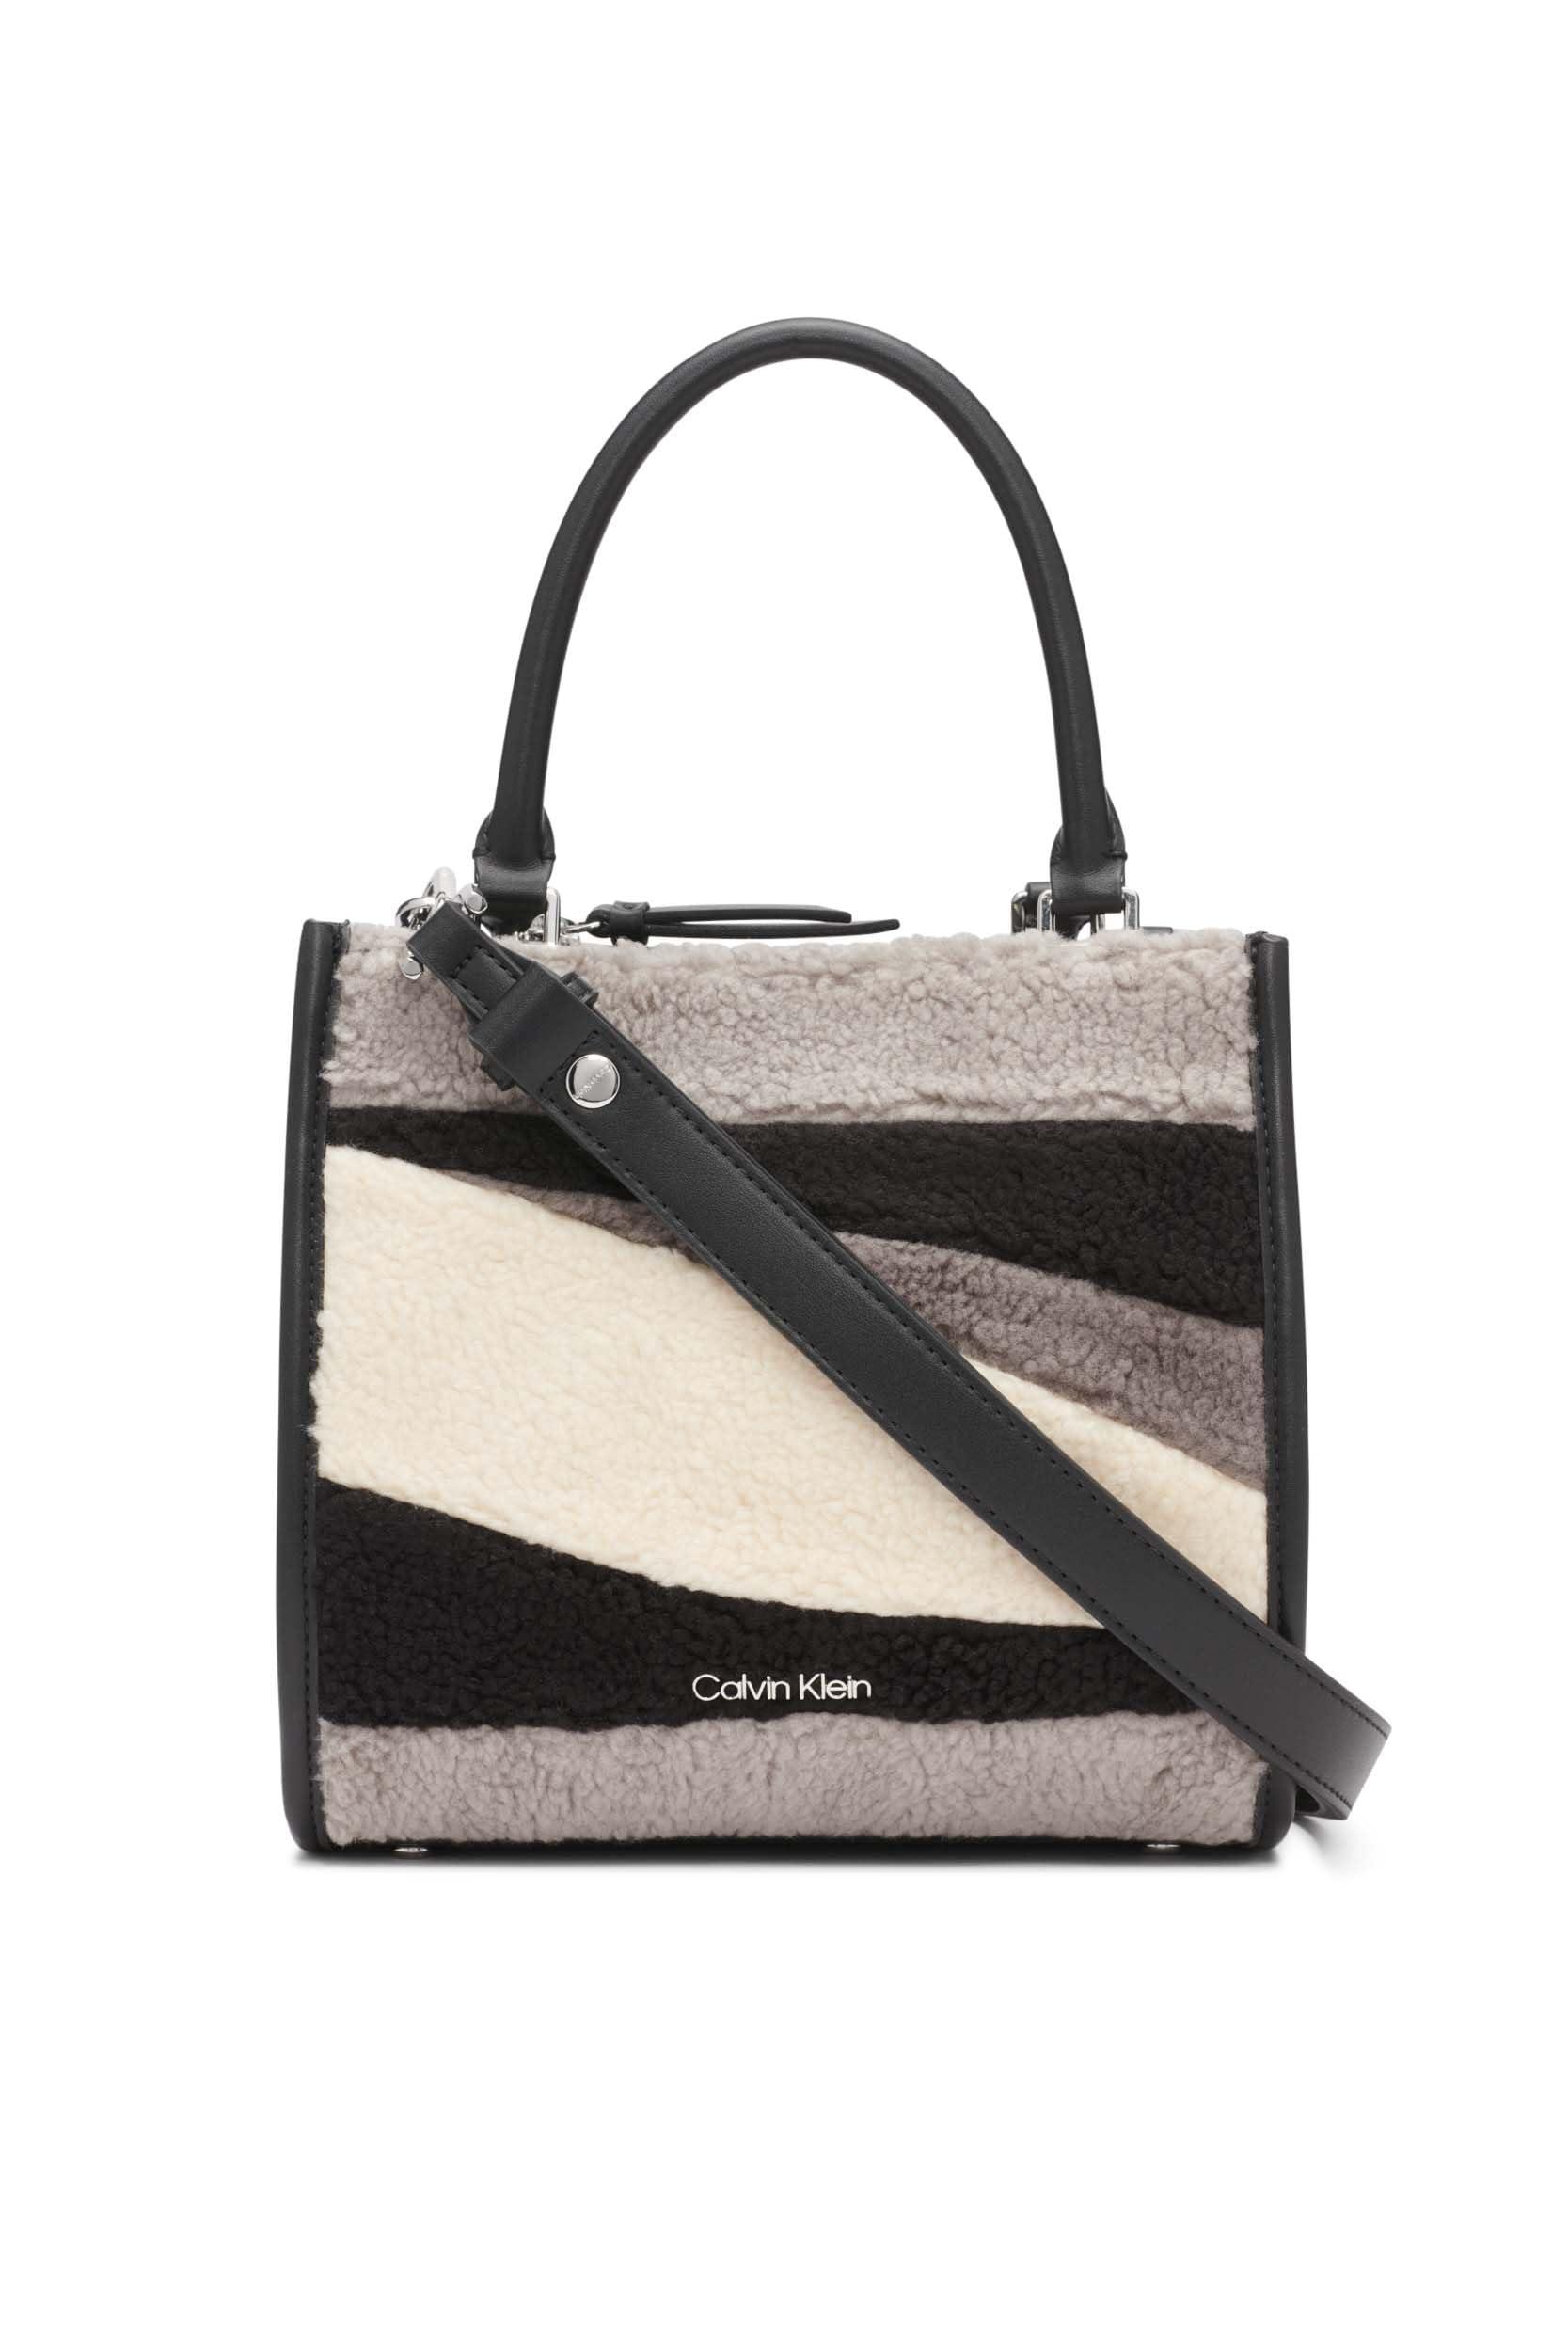 Calvin Klein Sophia Organizational Phone Crossbody, Almond/Taupe/Java:  Handbags